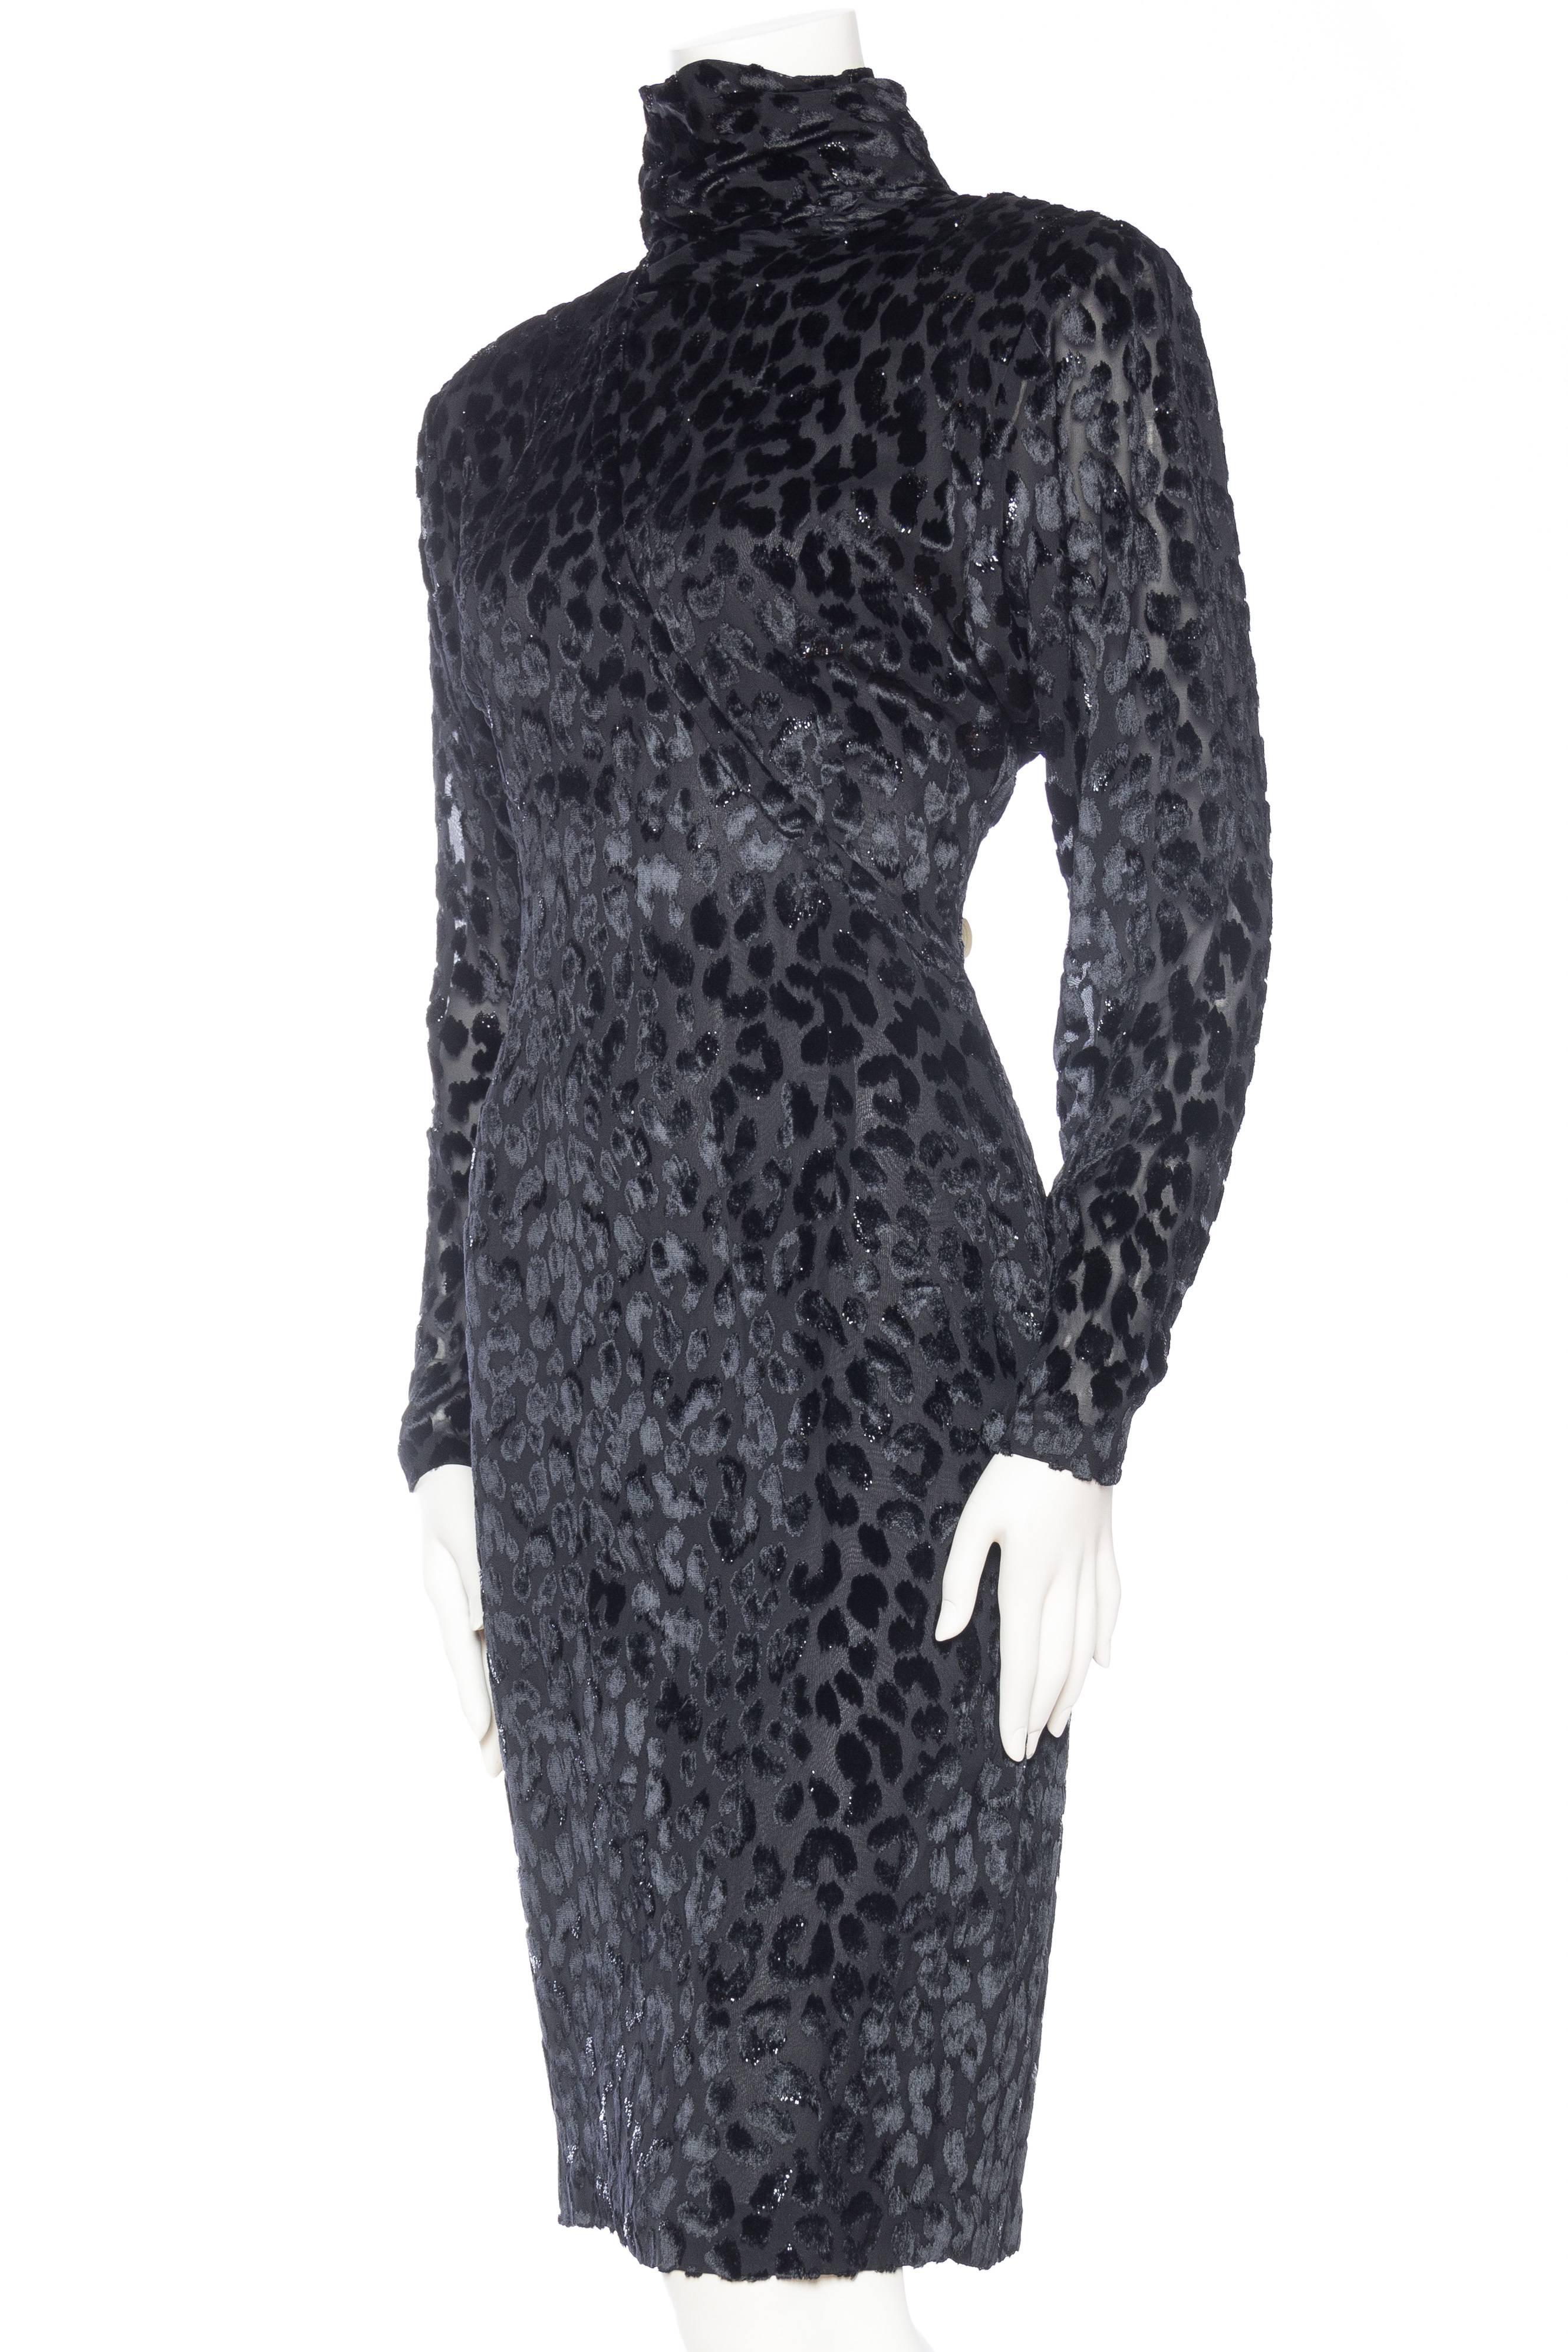 Women's 1980s Leopard Lurex and Velvet Dress